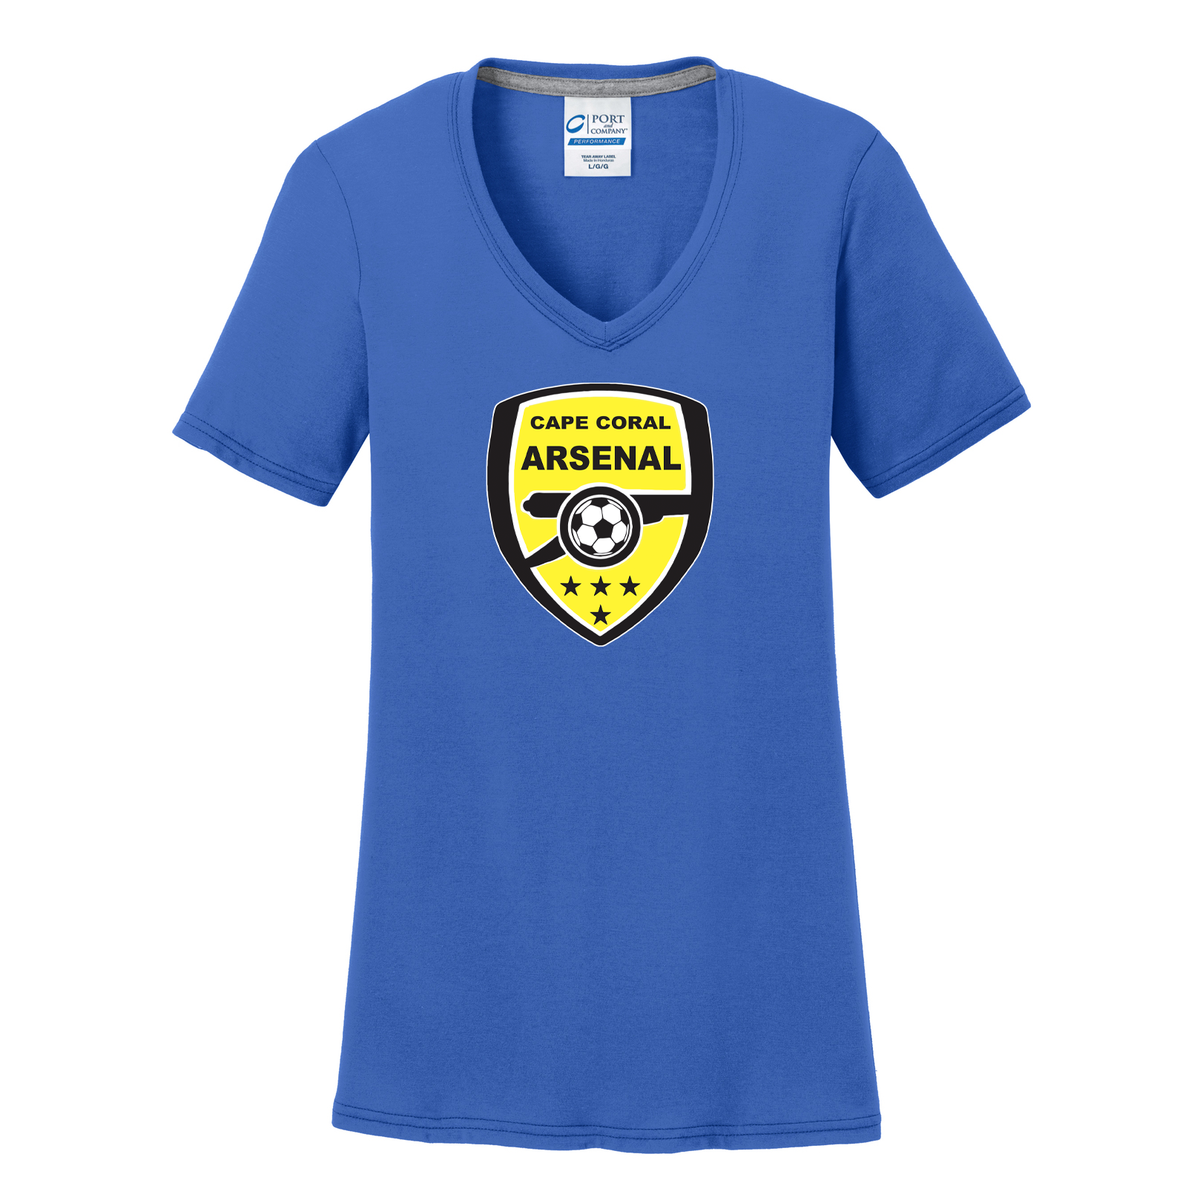 Cape Coral Arsenal Women's T-Shirt